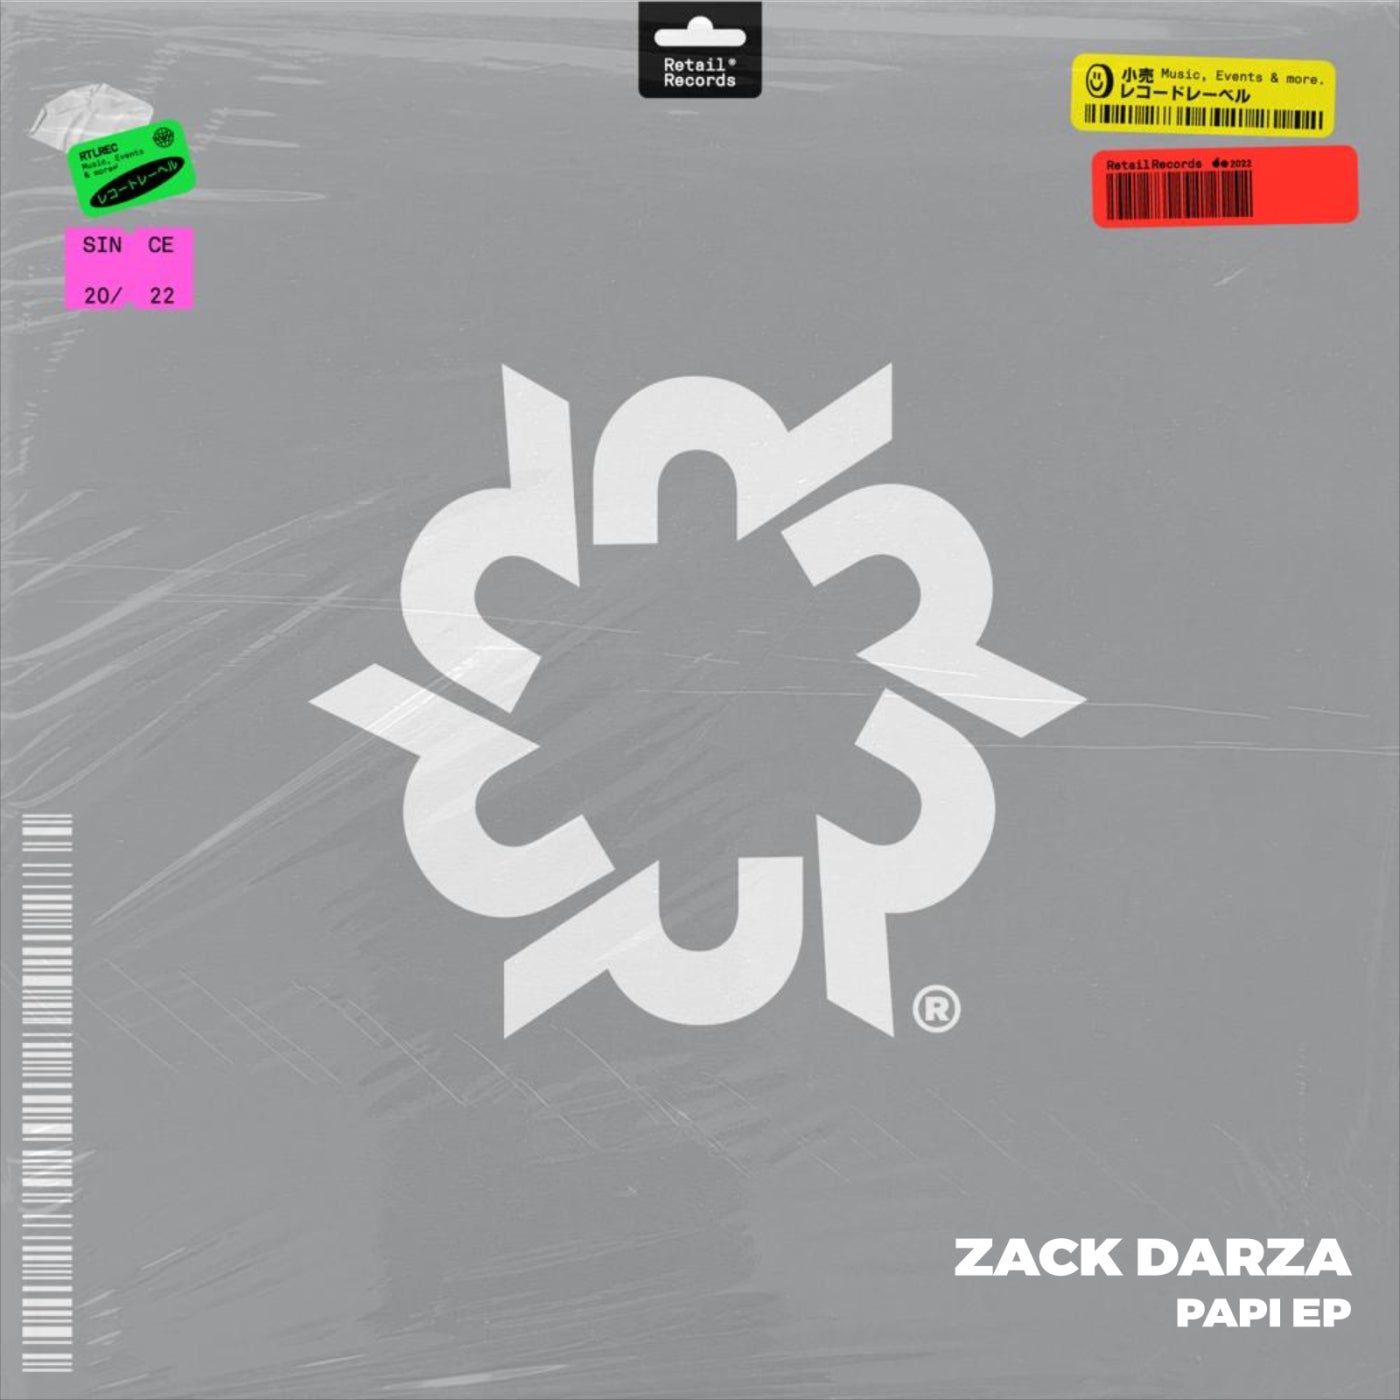 image cover: Zack Darza - Papi EP on Retail Records